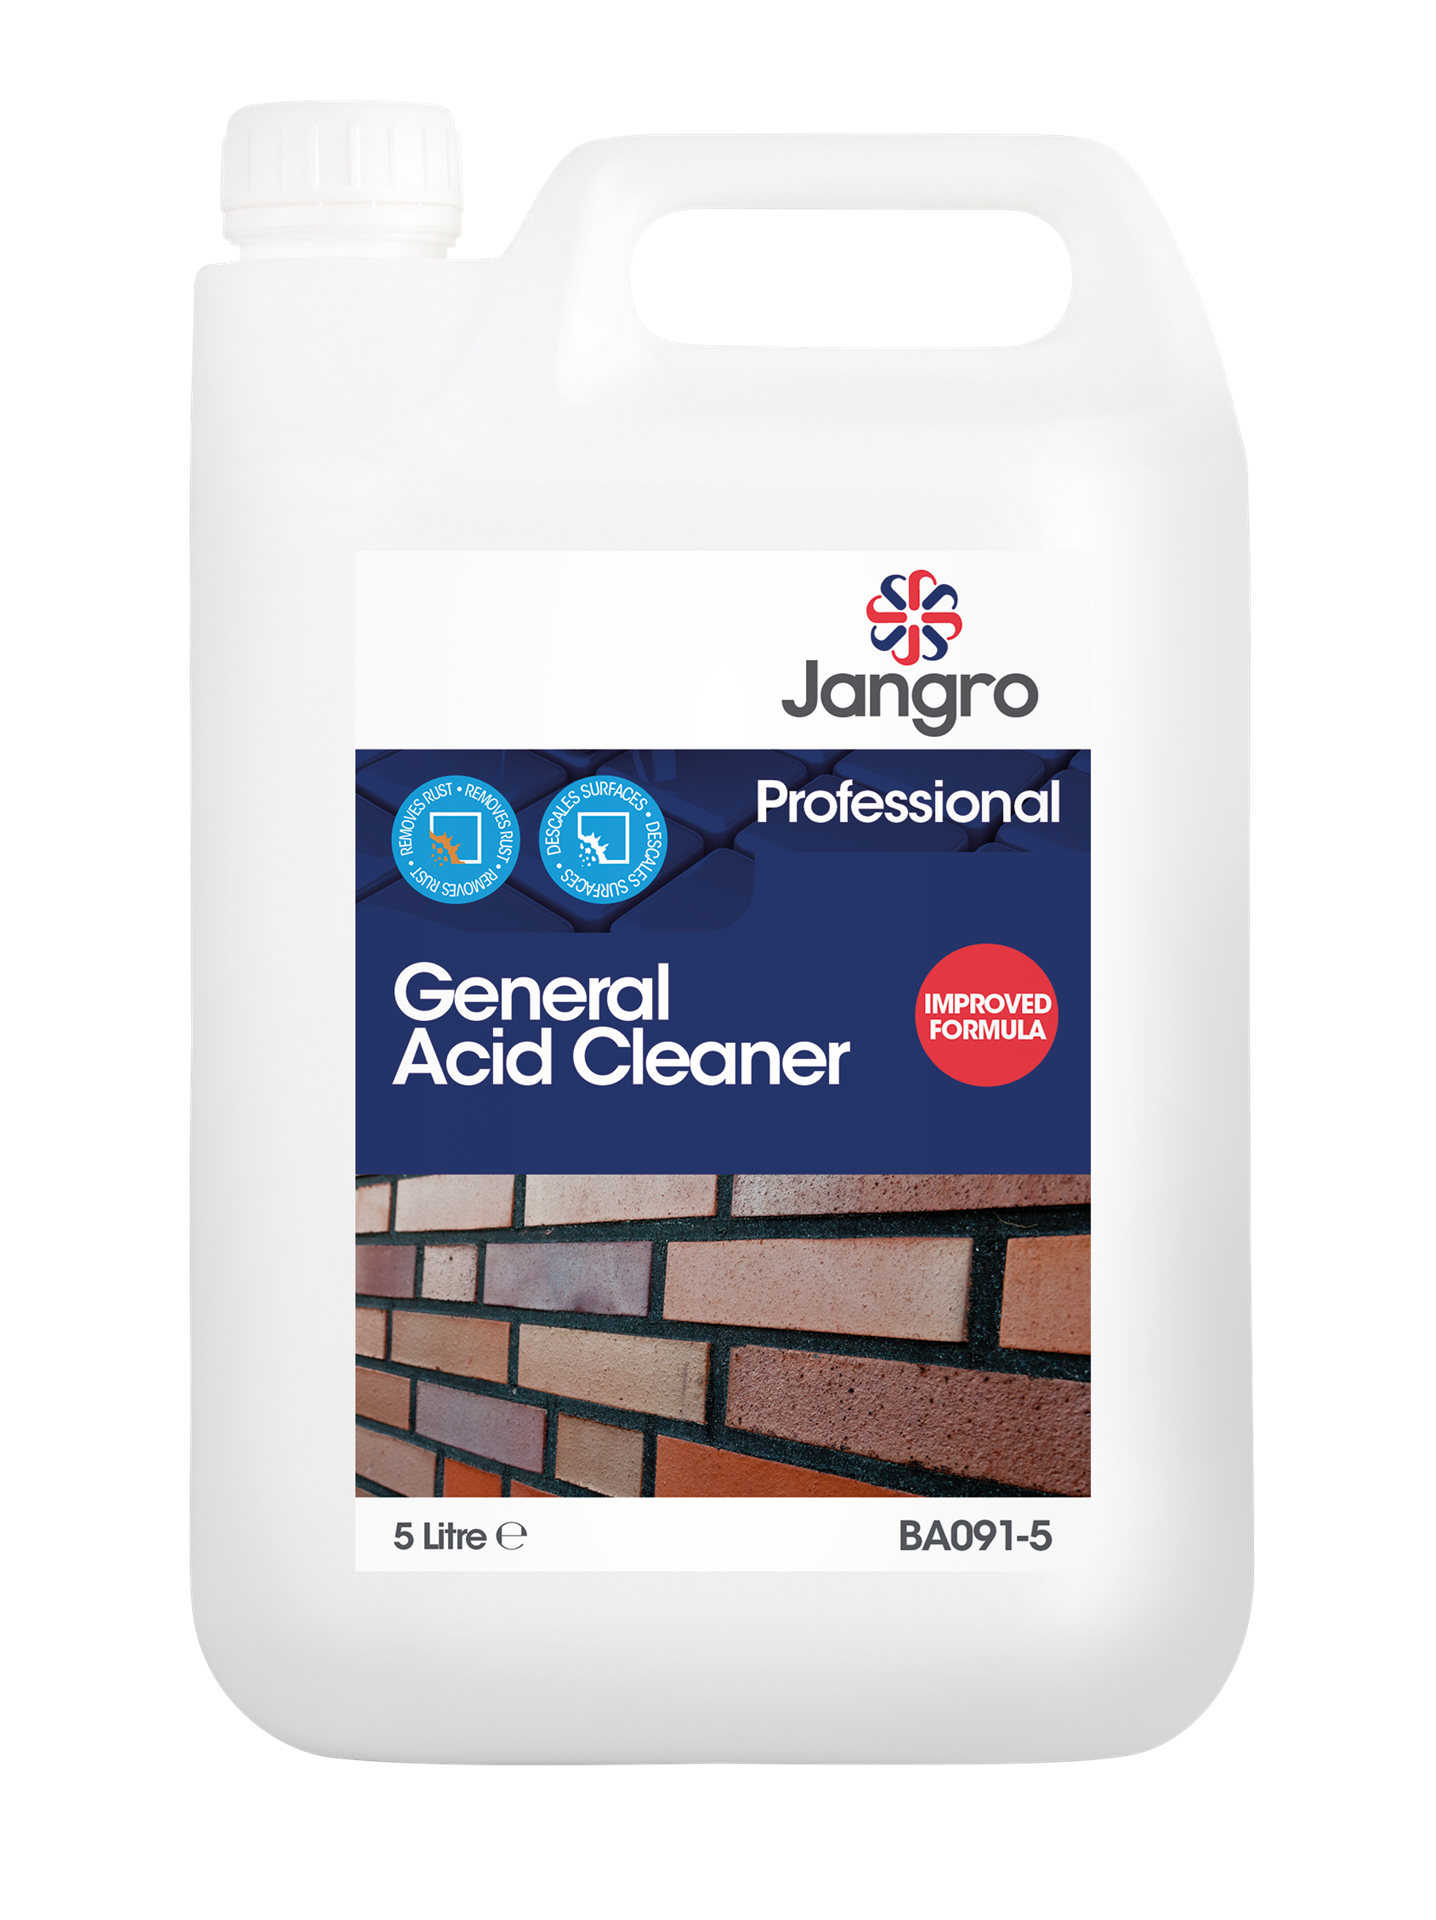 Jangro Professional General Acid Cleaner, 5 Litre - H006-5LX2